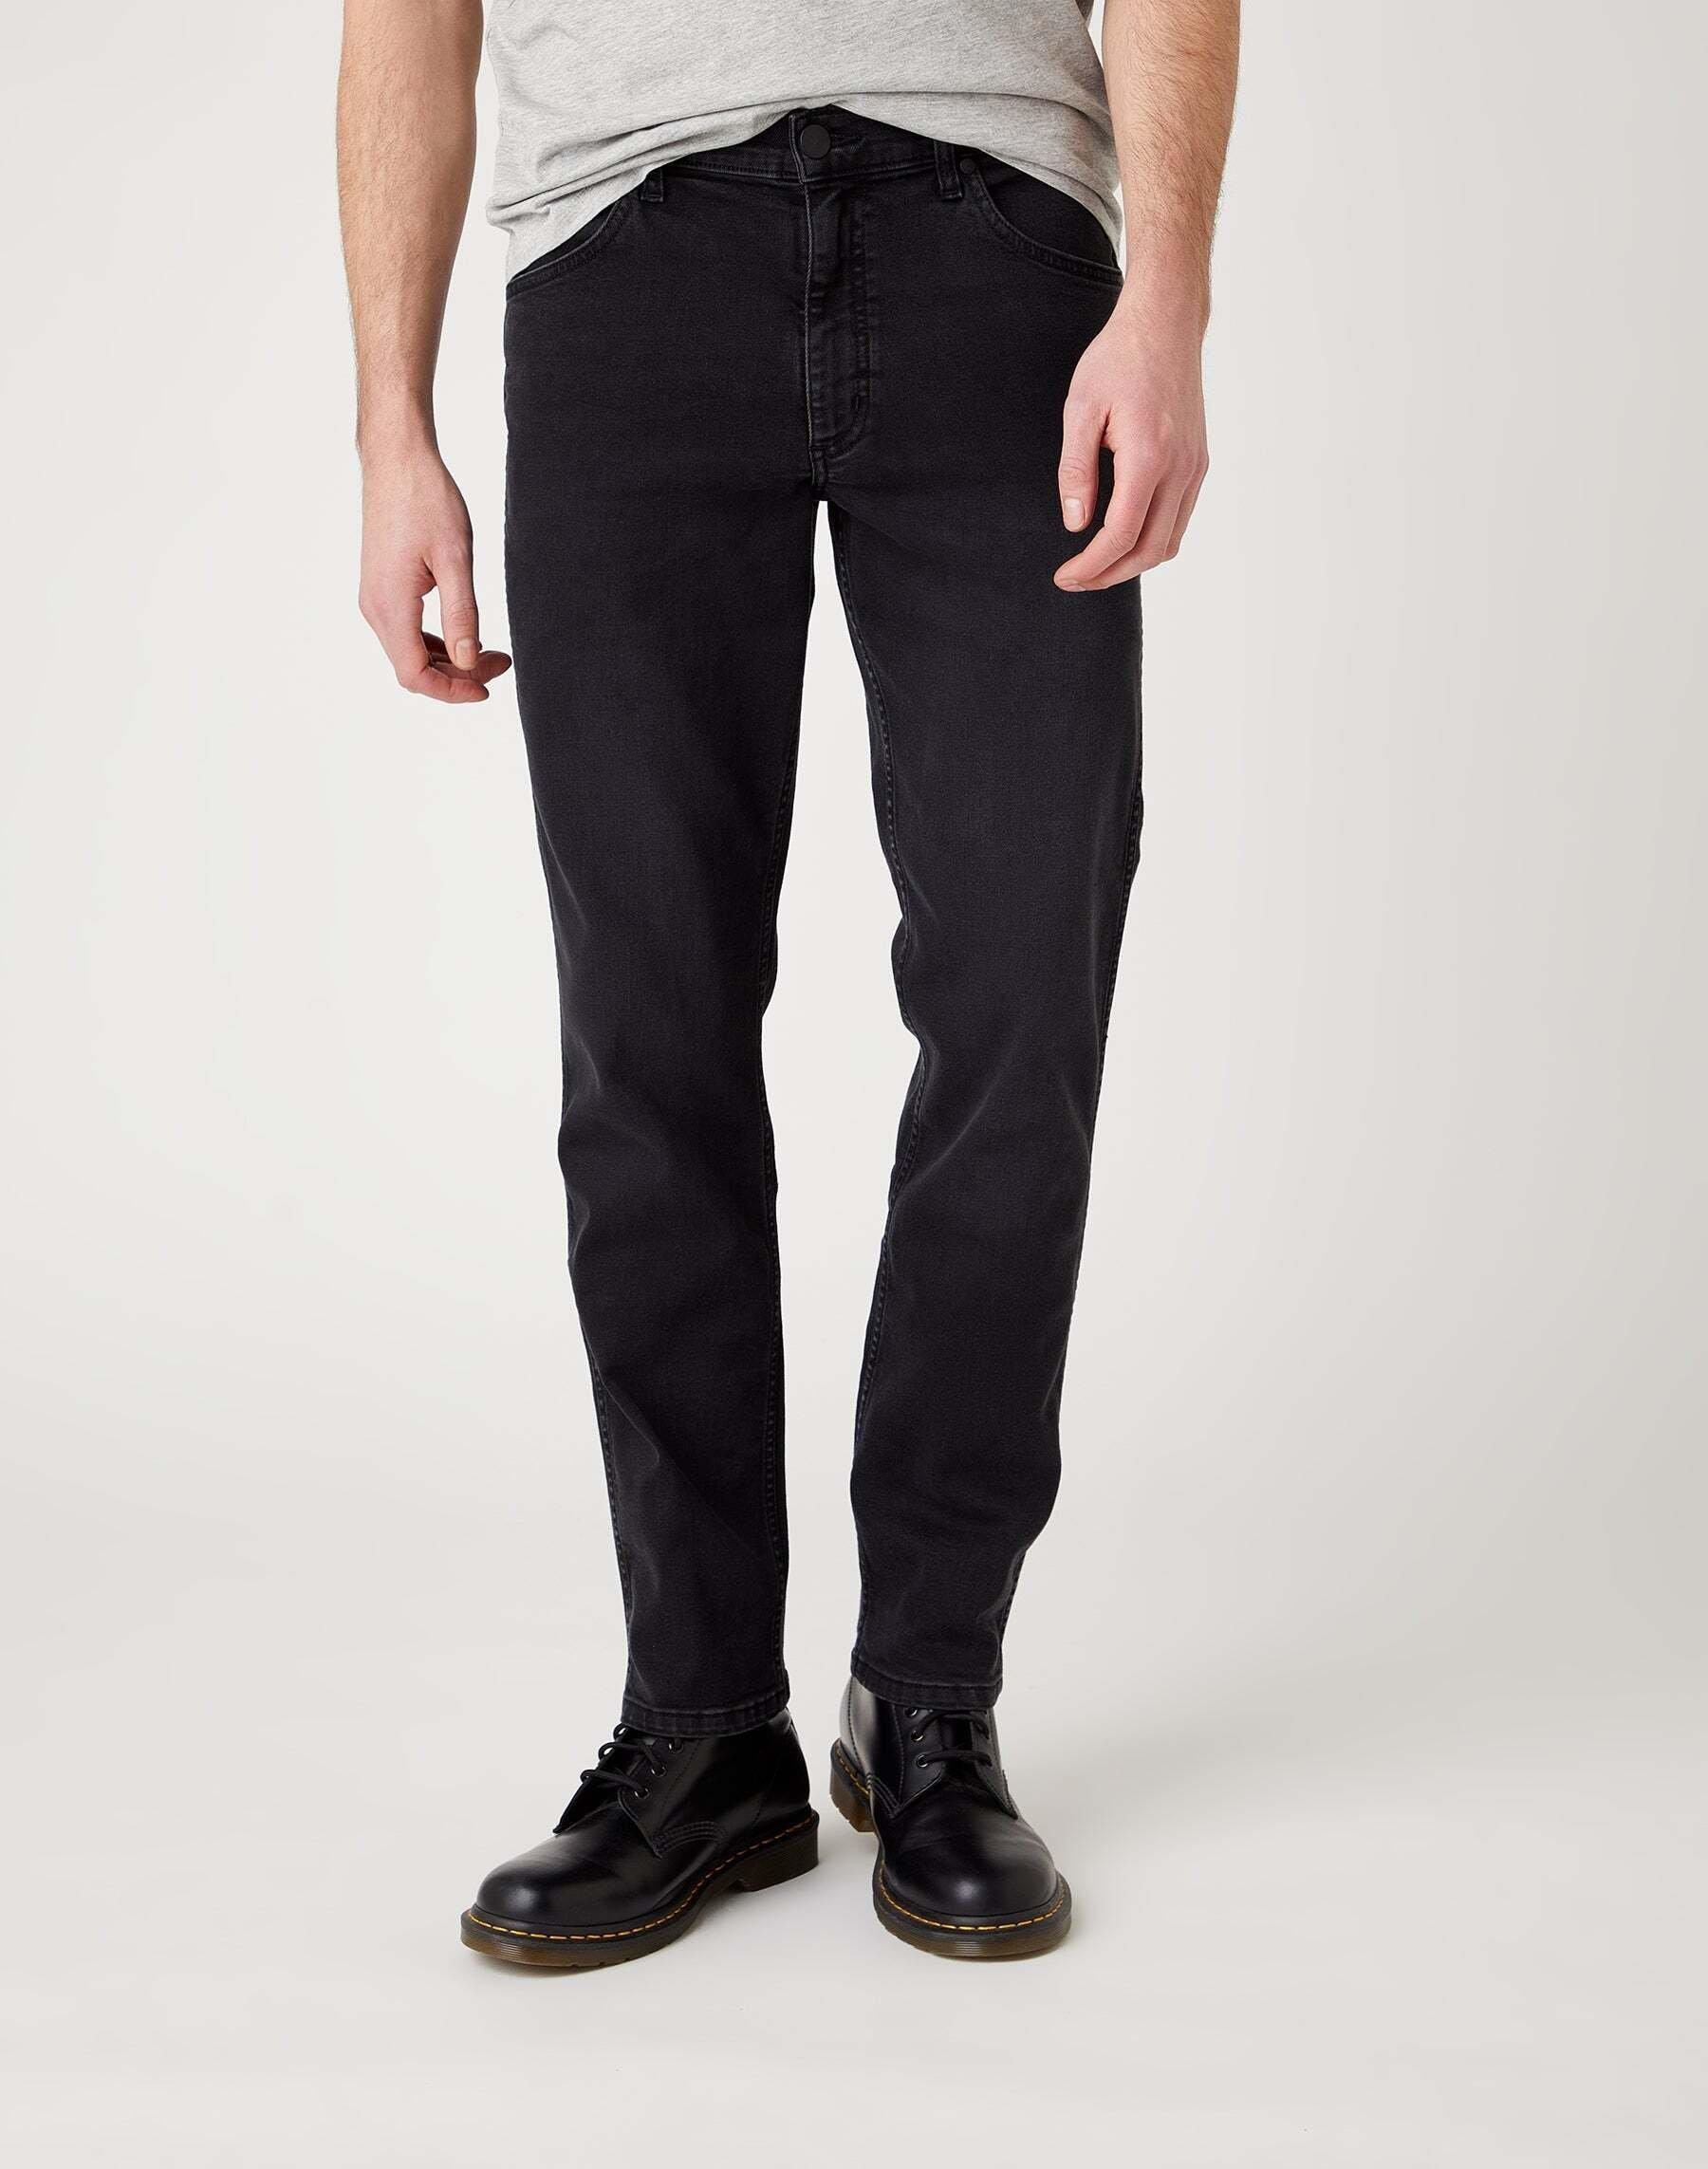 Jeans Straight Leg Greensboro Herren Schwarz L30/W32 von Wrangler